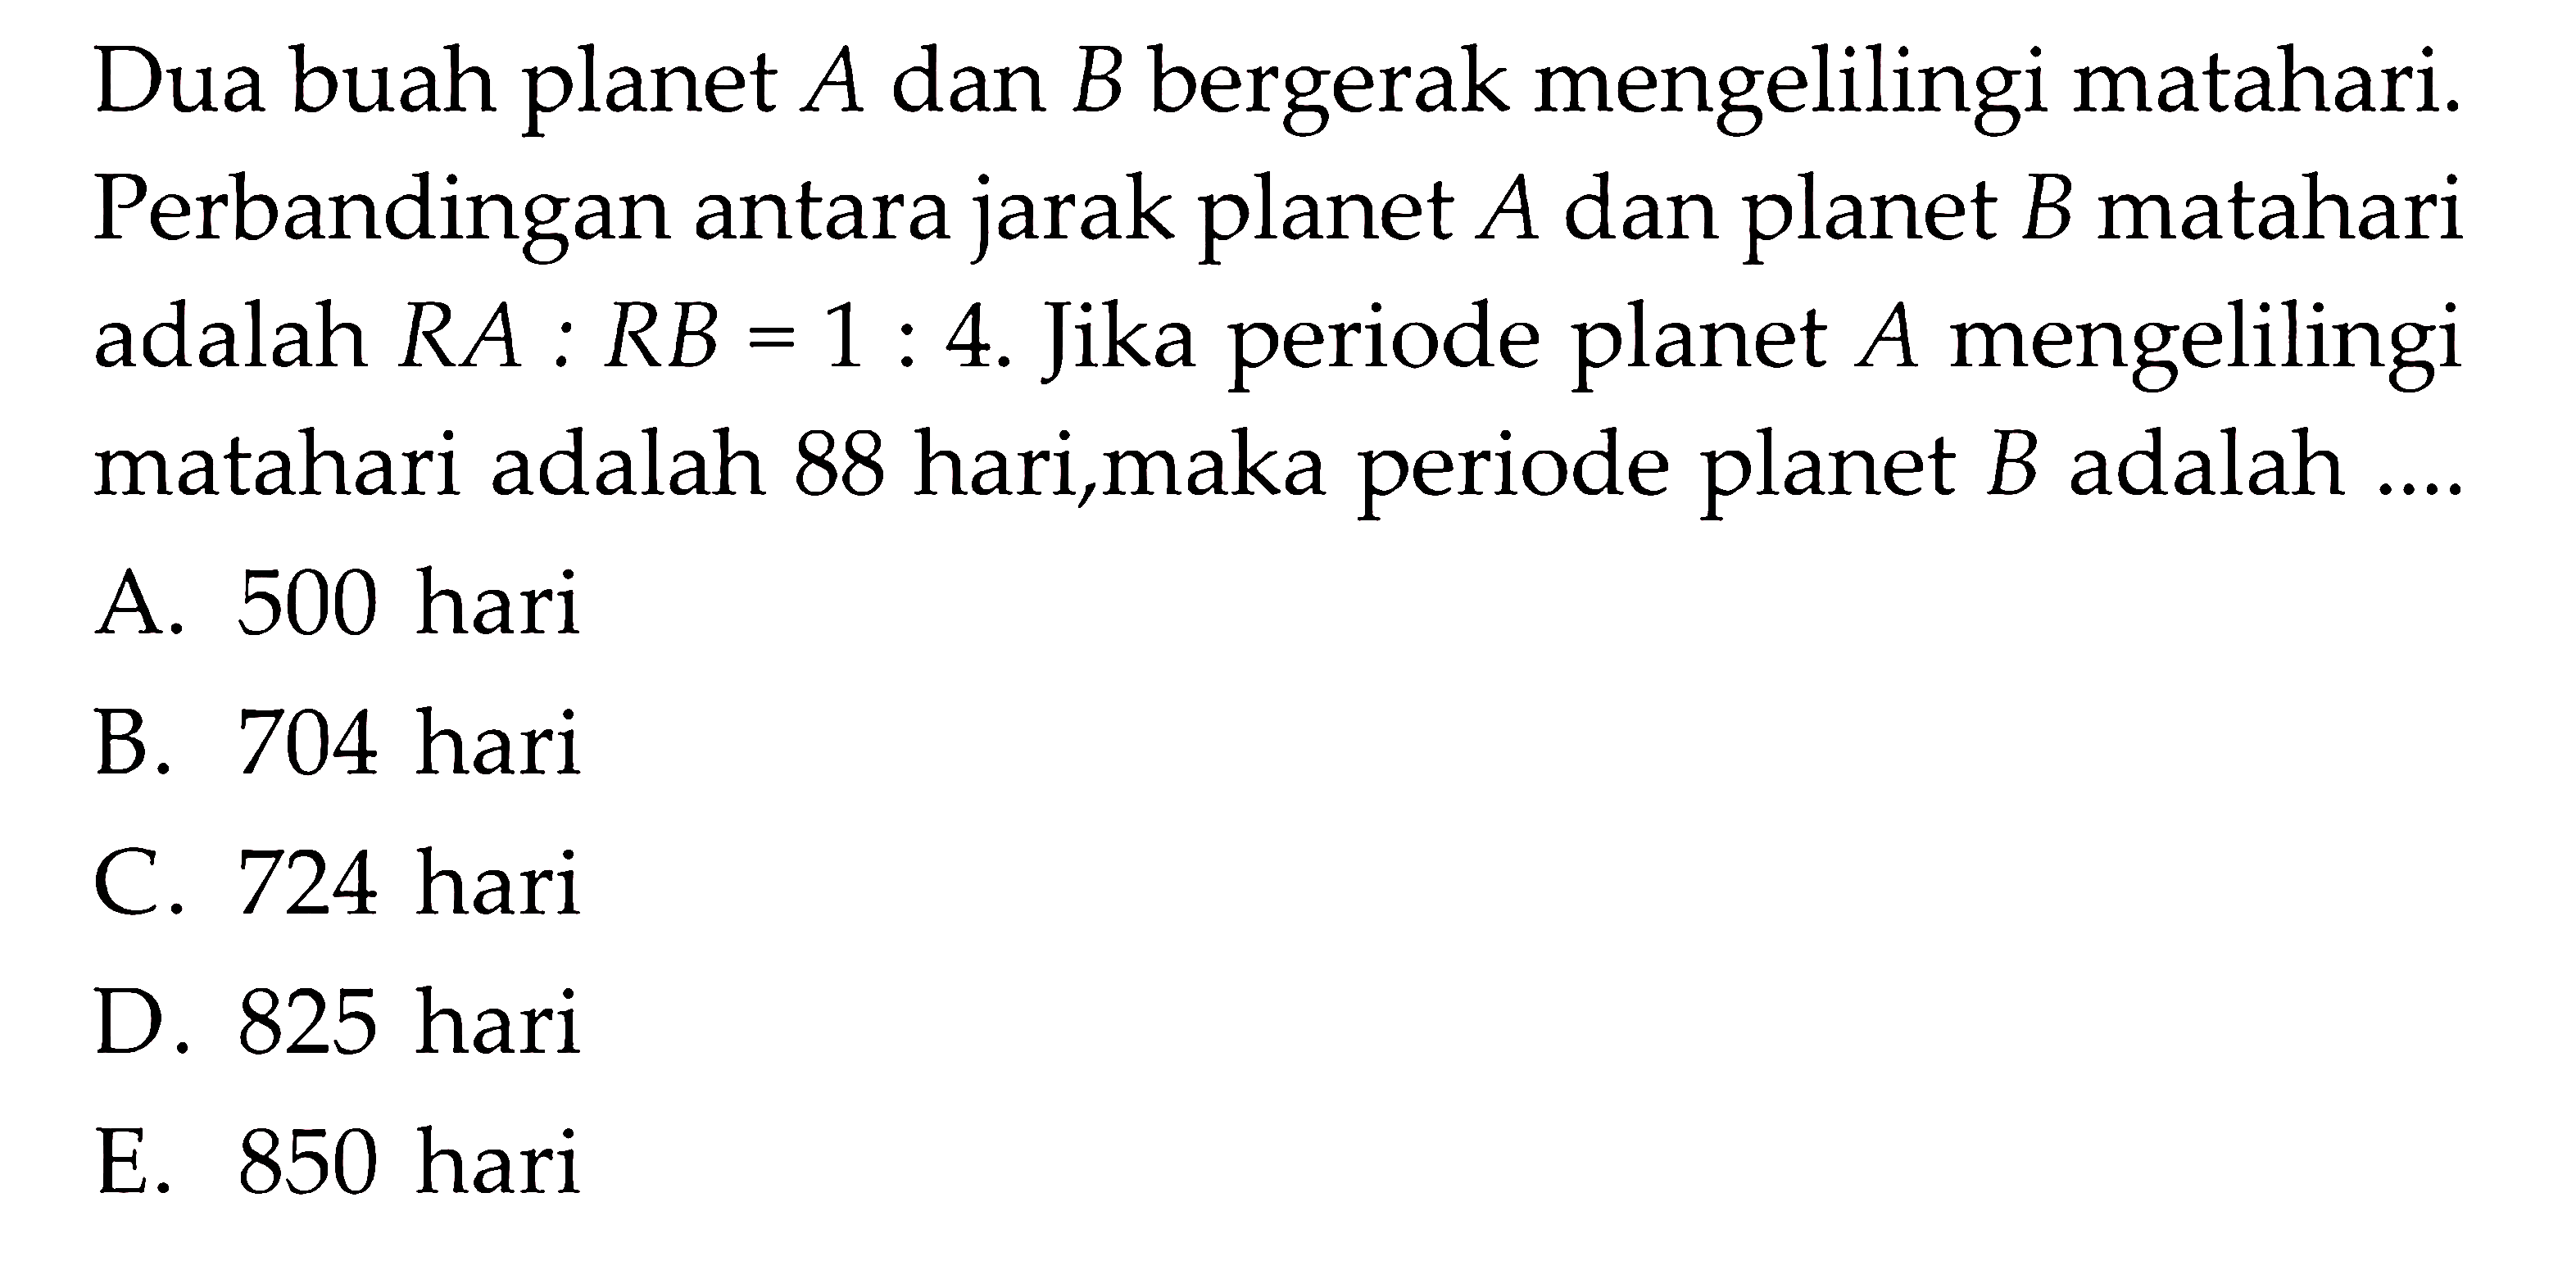 Dua buah planet  A  dan  B  bergerak mengelilingi matahari. Perbandingan antara jarak planet  A  dan planet  B  matahari adalah  R A: R B=1: 4 . Jika periode planet  A  mengelilingi matahari adalah 88 hari,maka periode planet  B  adalah ....